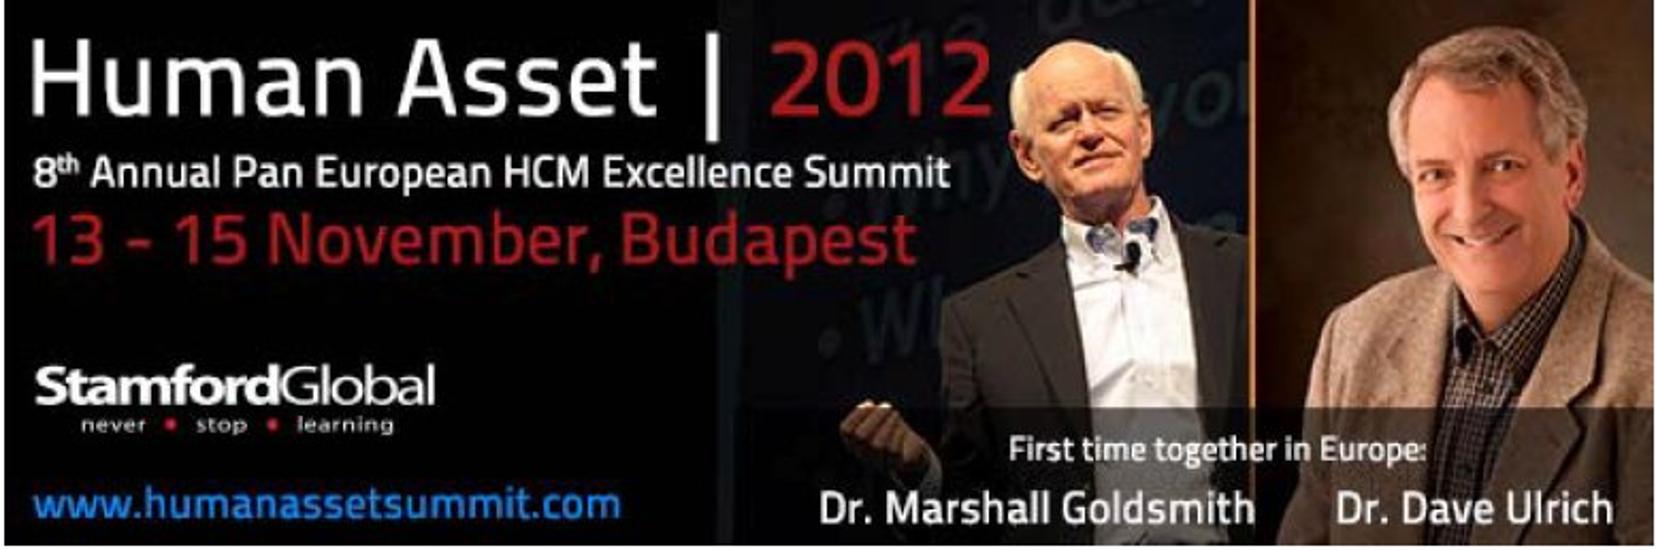 Invitation: 8th Pan European Human Asset Summit, Budapest, 13 - 15 November